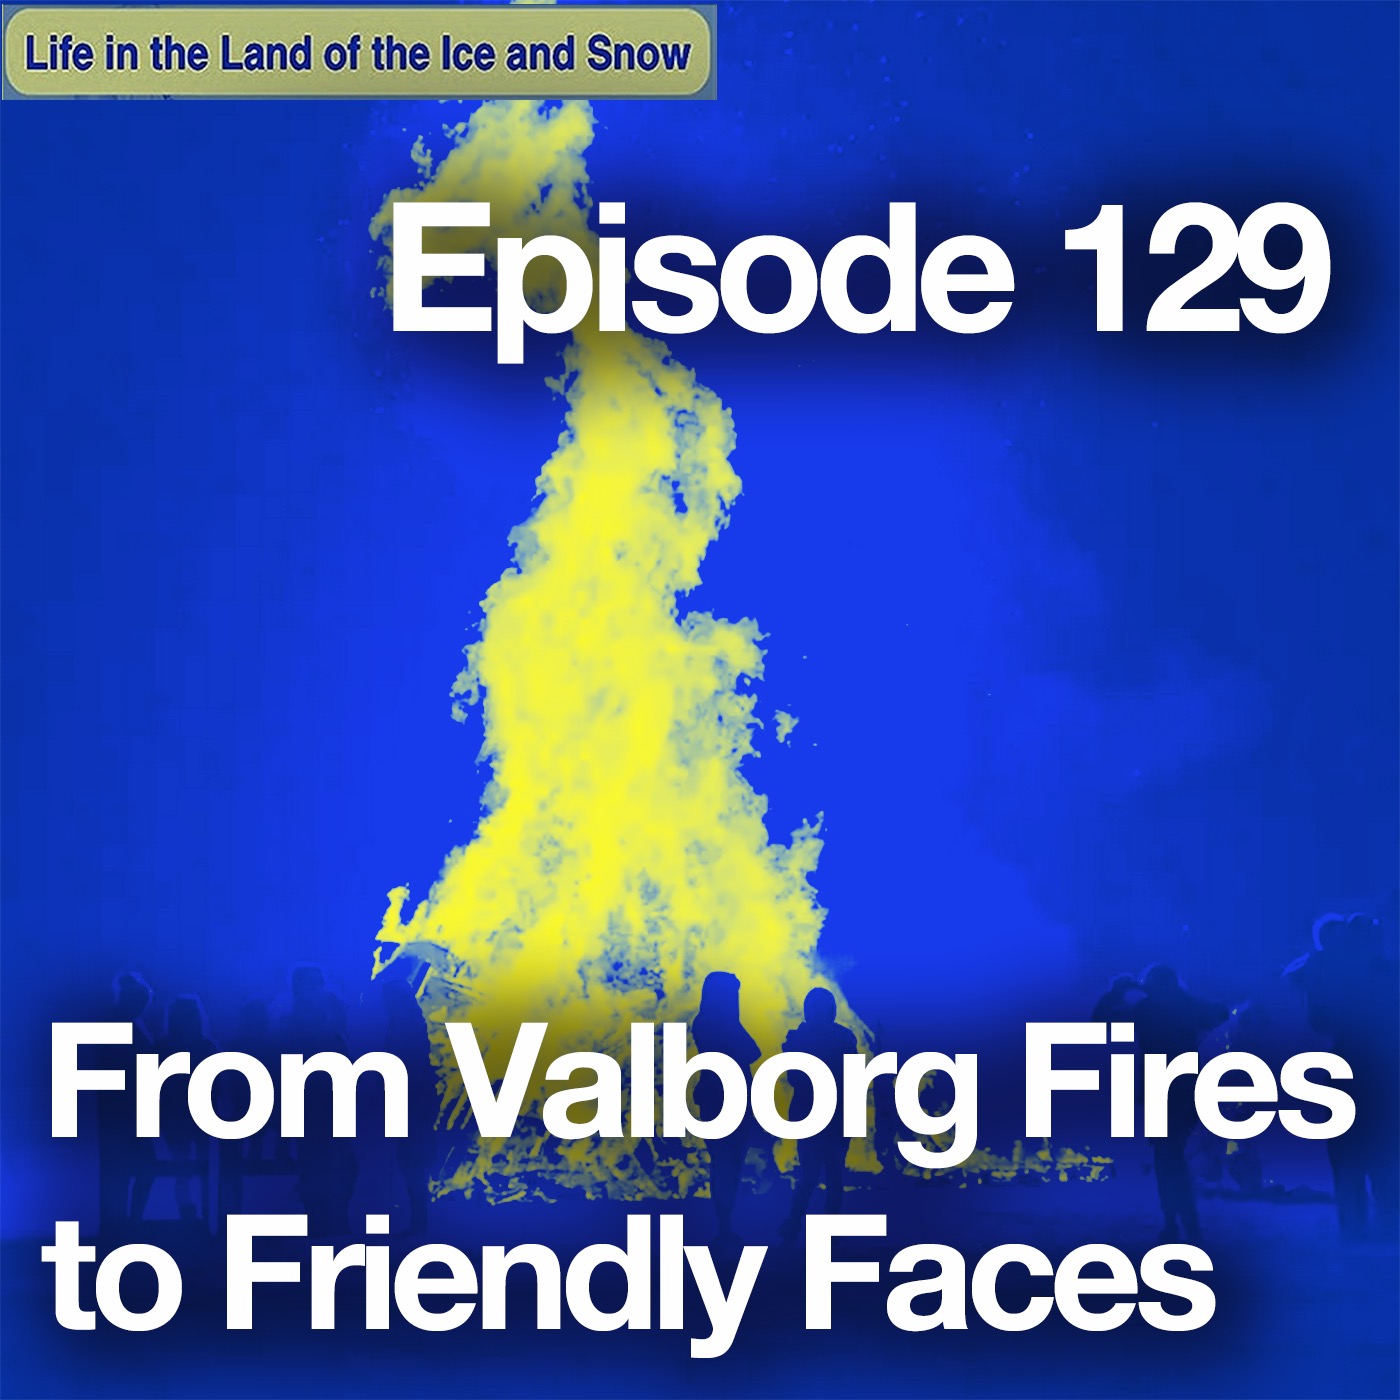 image shows a Swedish Valborg bonfire